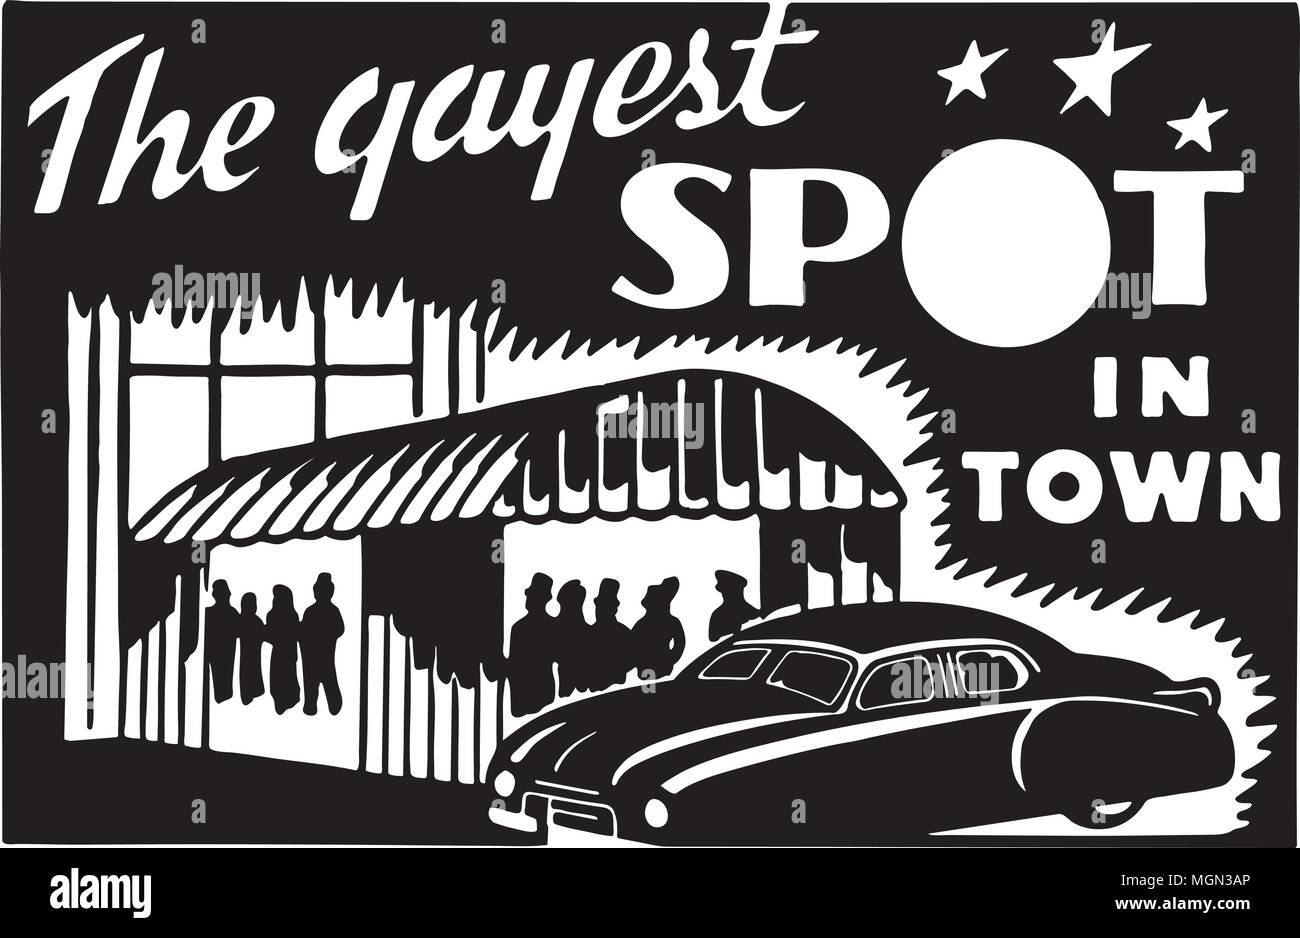 Der Gayest Spot in der Stadt 2 - Retro Ad Kunst Banner Stock Vektor